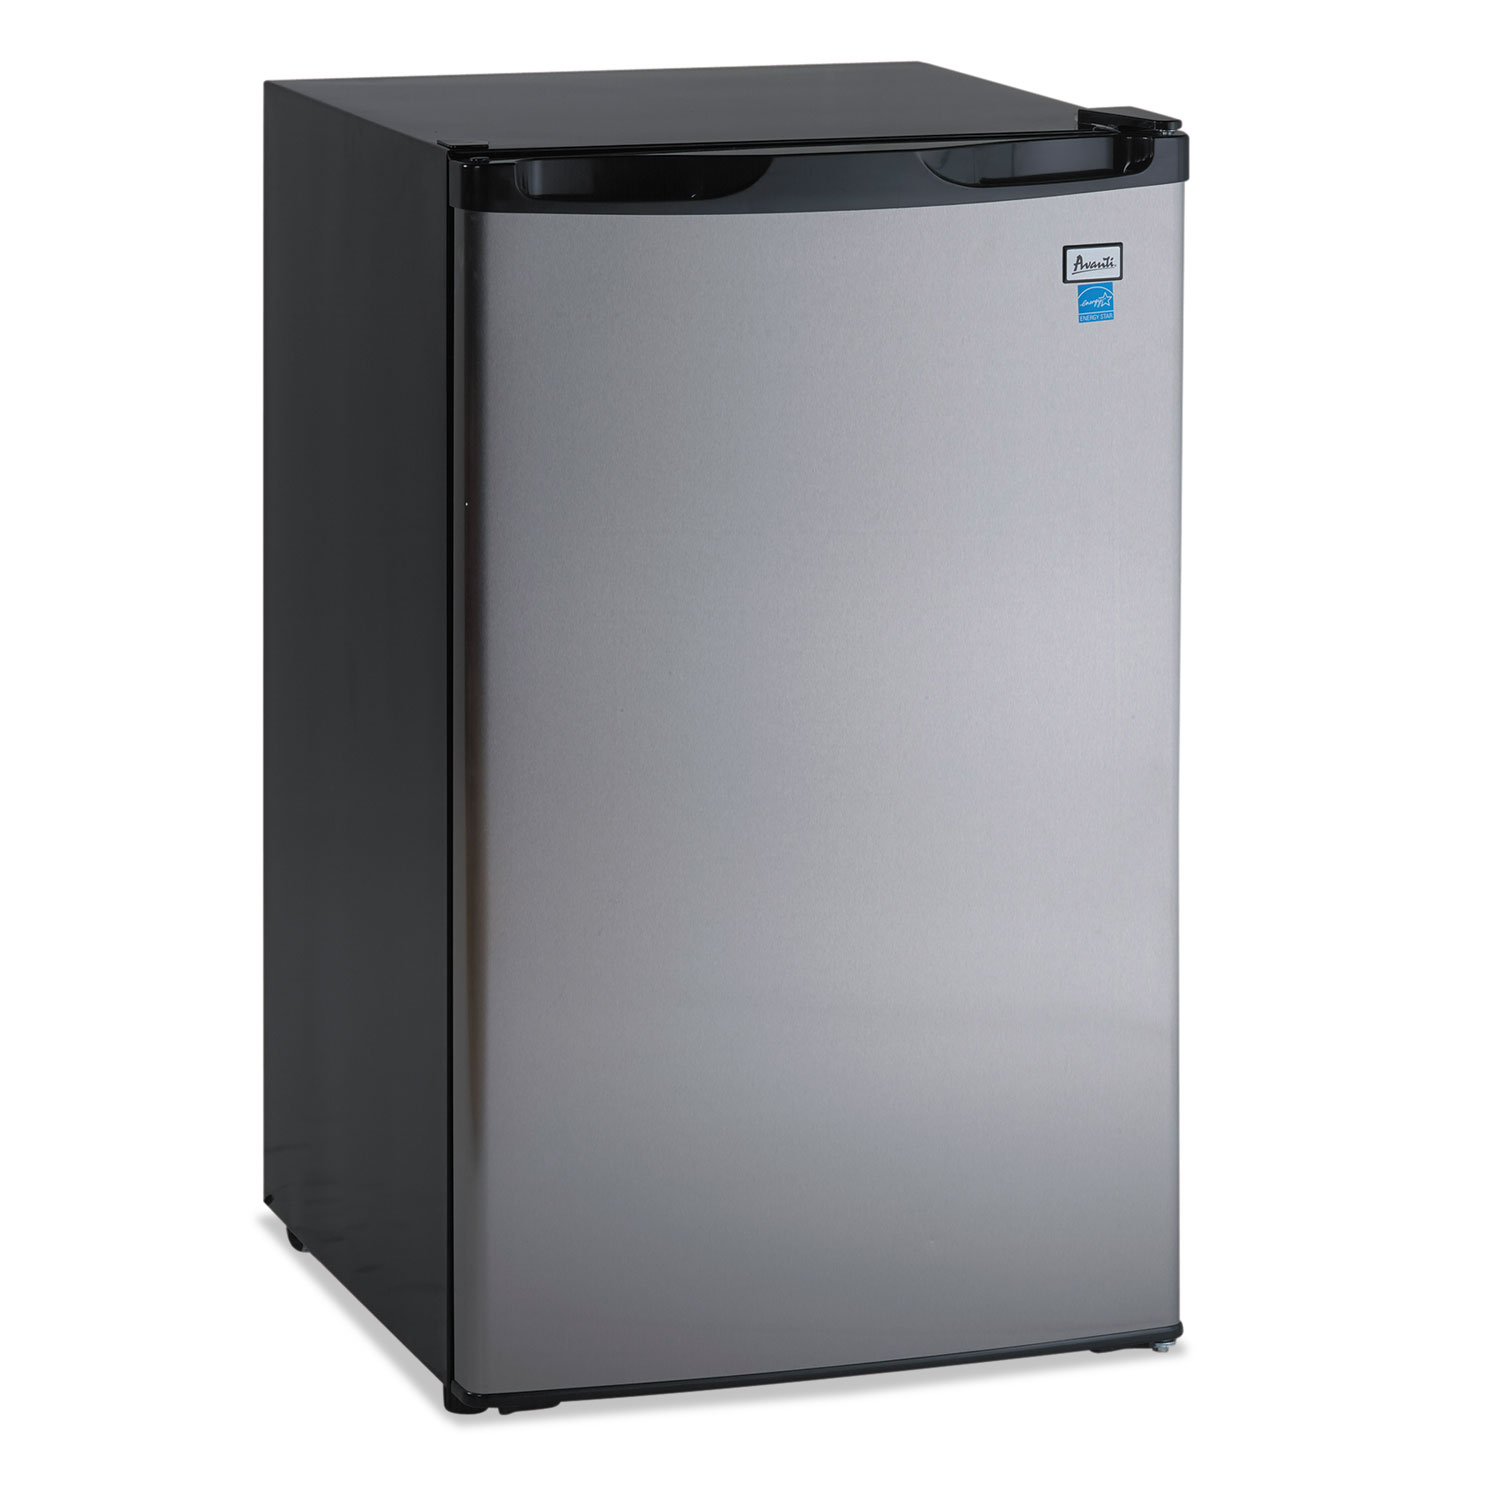  Avanti RM4436SS 4.4 CF Refrigerator, 19 1/2W x 22D x 33H, Black/Stainless Steel (AVARM4436SS) 